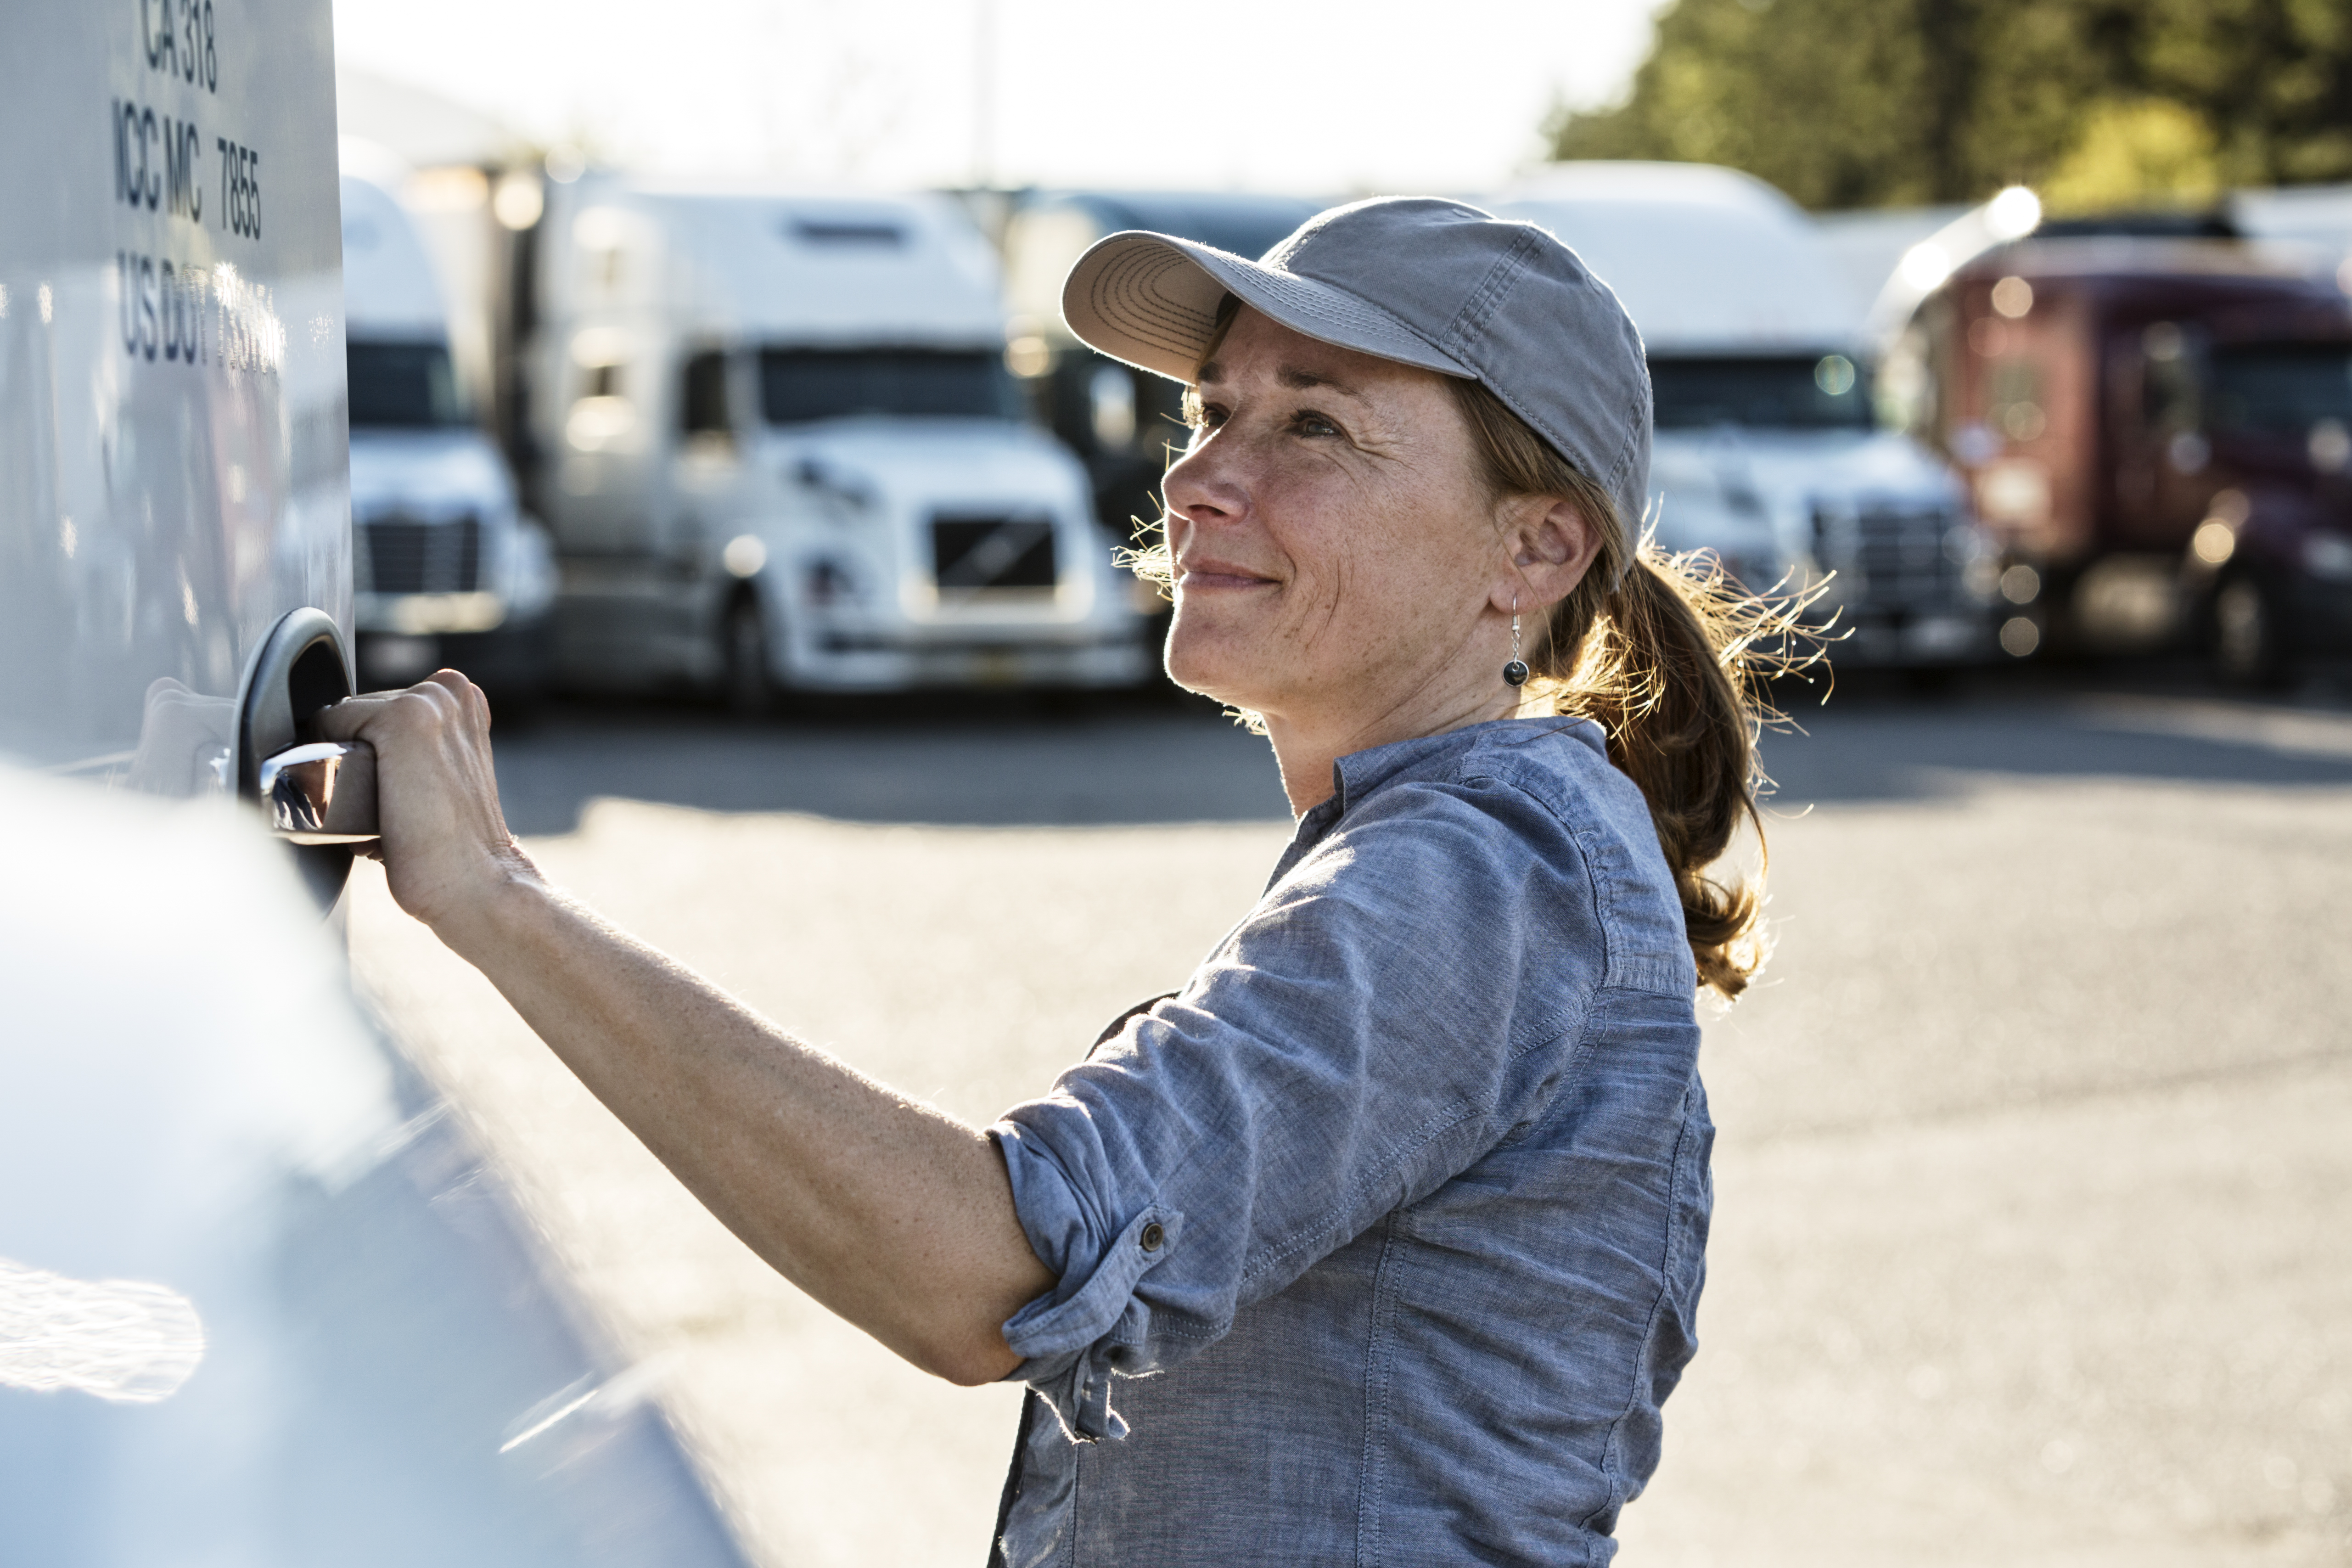 woman trucker standing in front of trucks parking in a lot